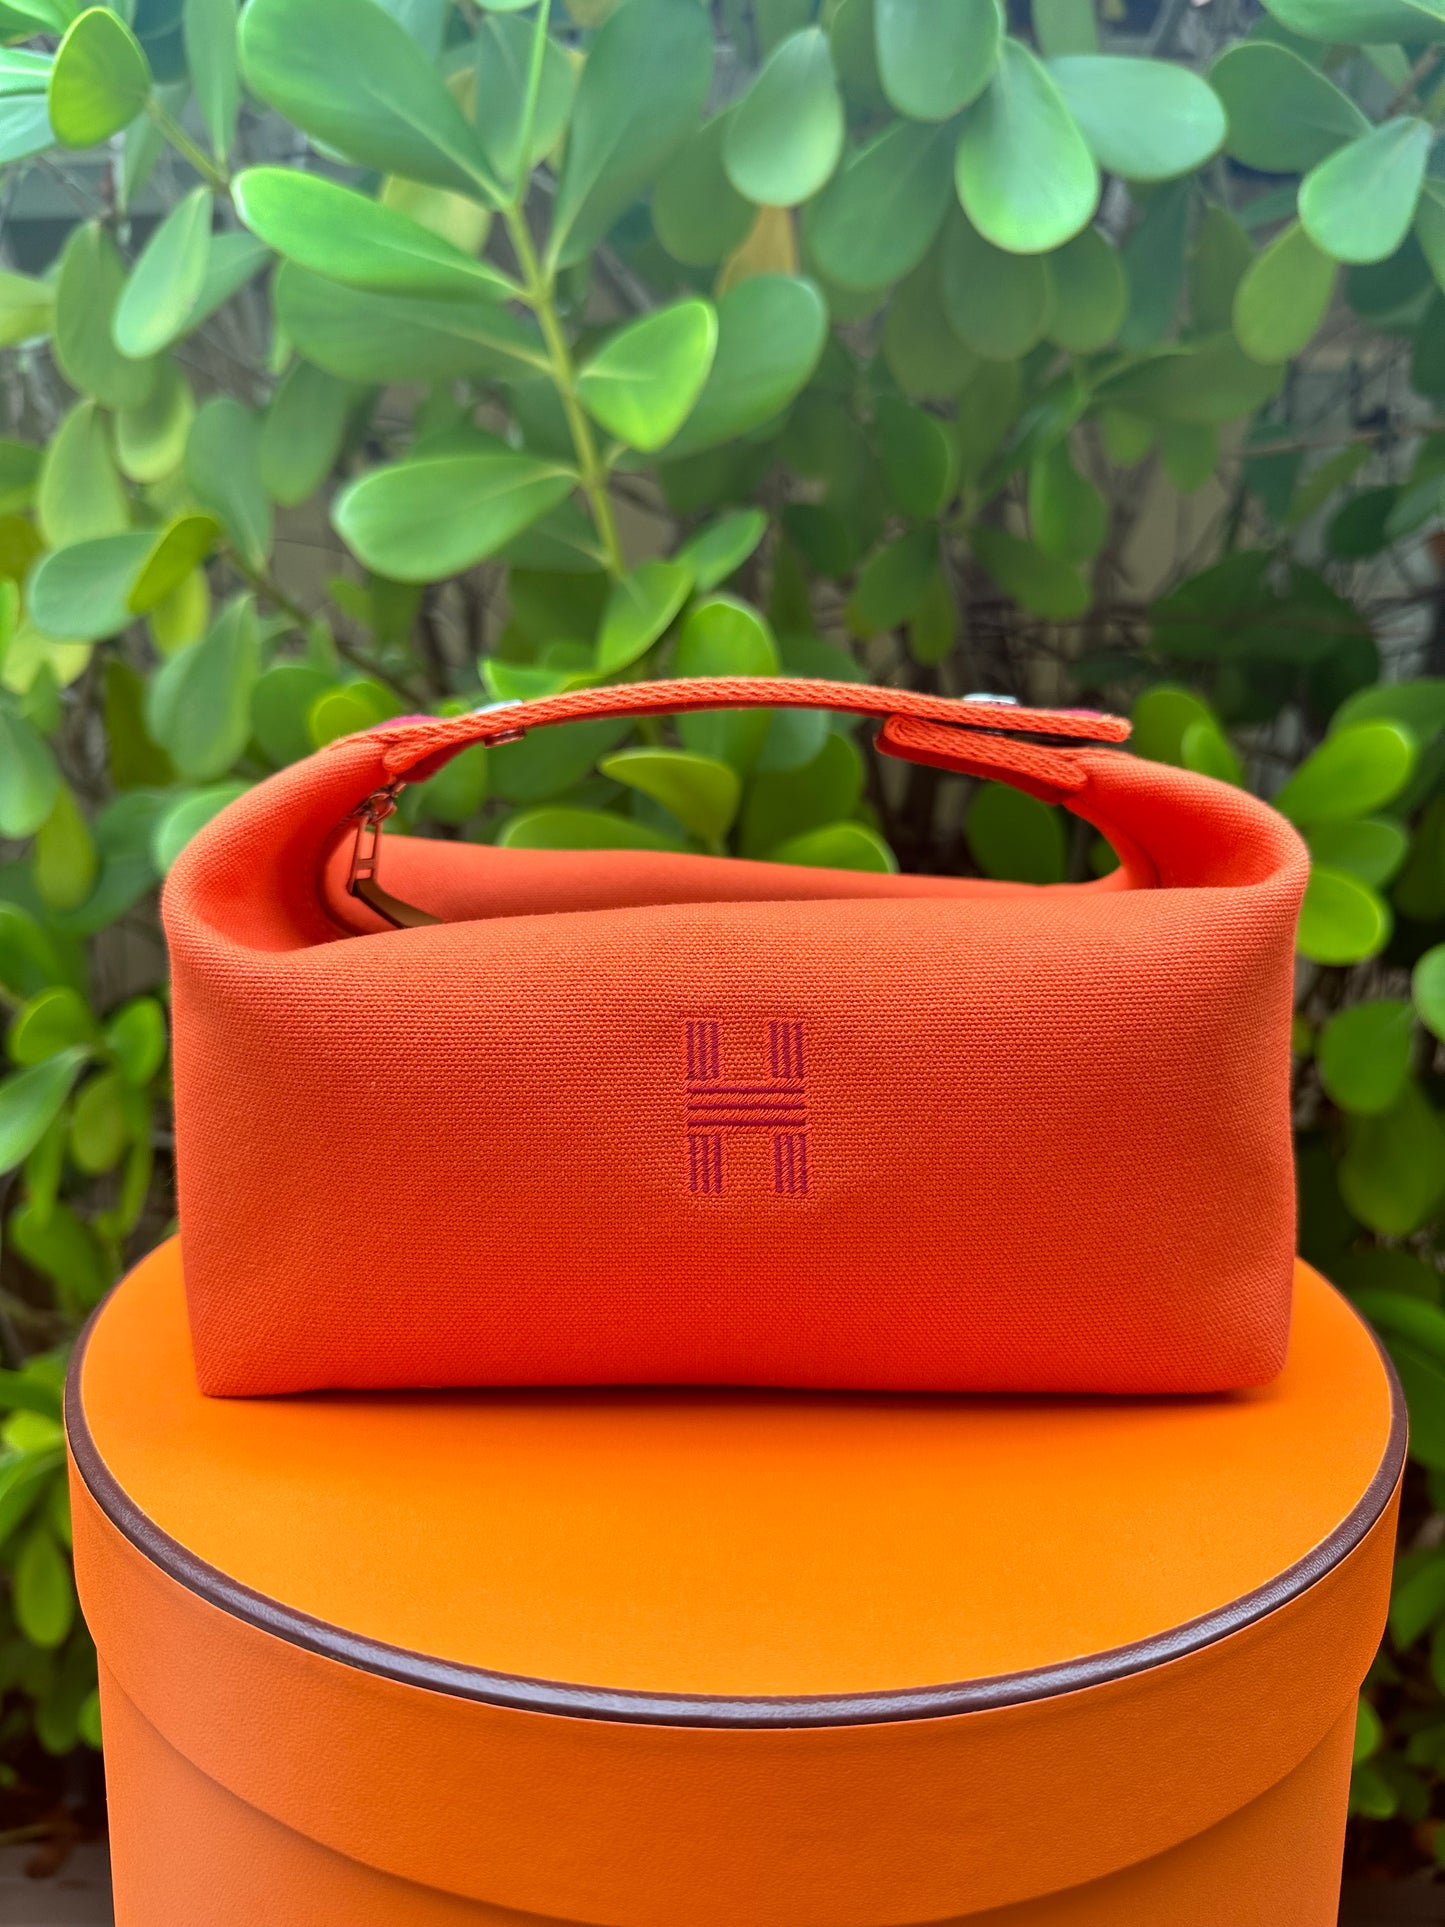 Hermes Bride-A-Brac Case PM Canvas Orange Burgundy Strap Pouch Small Model